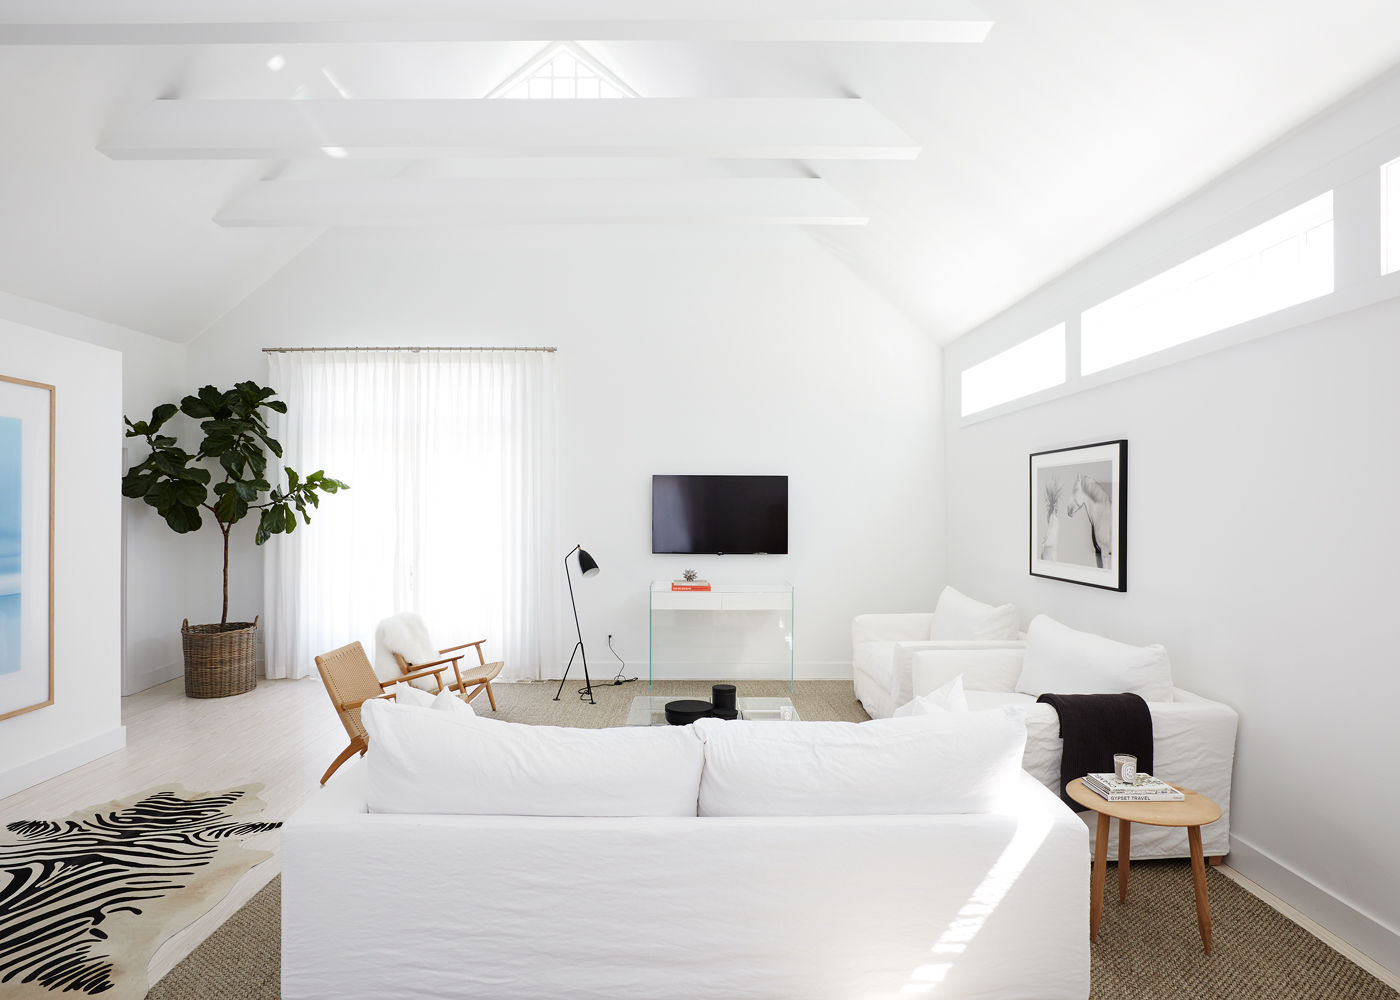 Modern white living room ideas - a minimalist interior